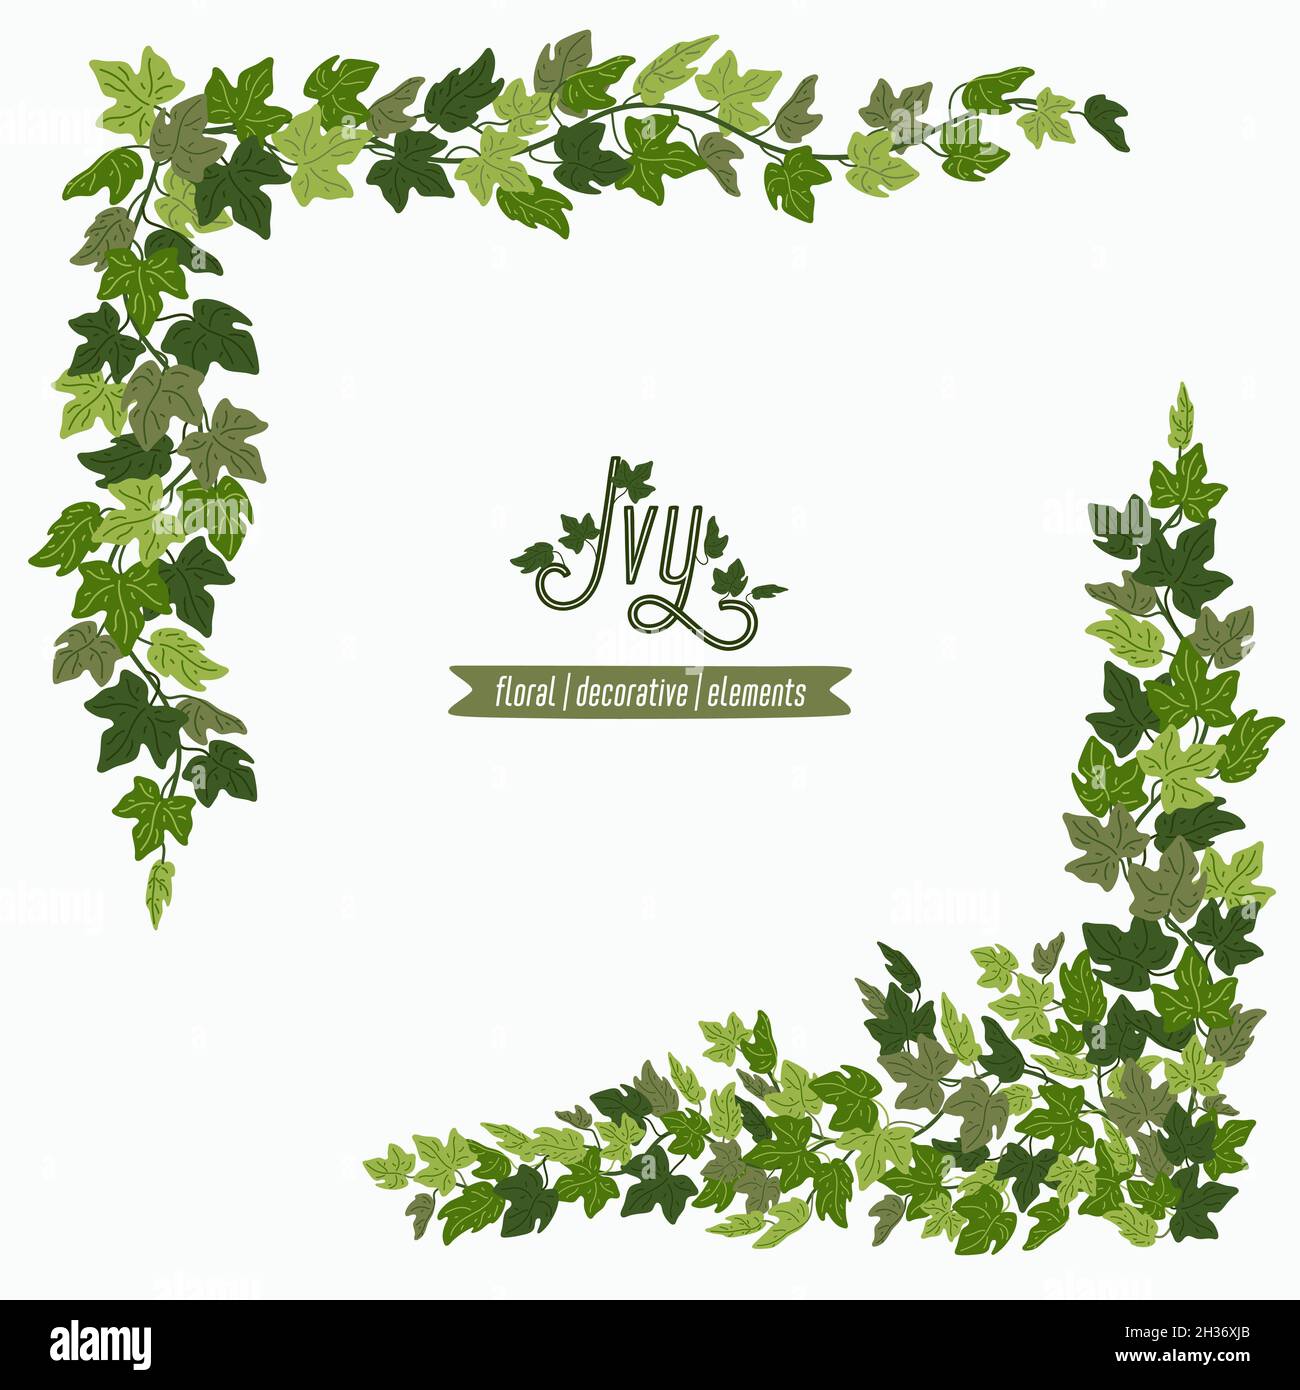 Ivy corners, green vines decorative frame or design elements ...